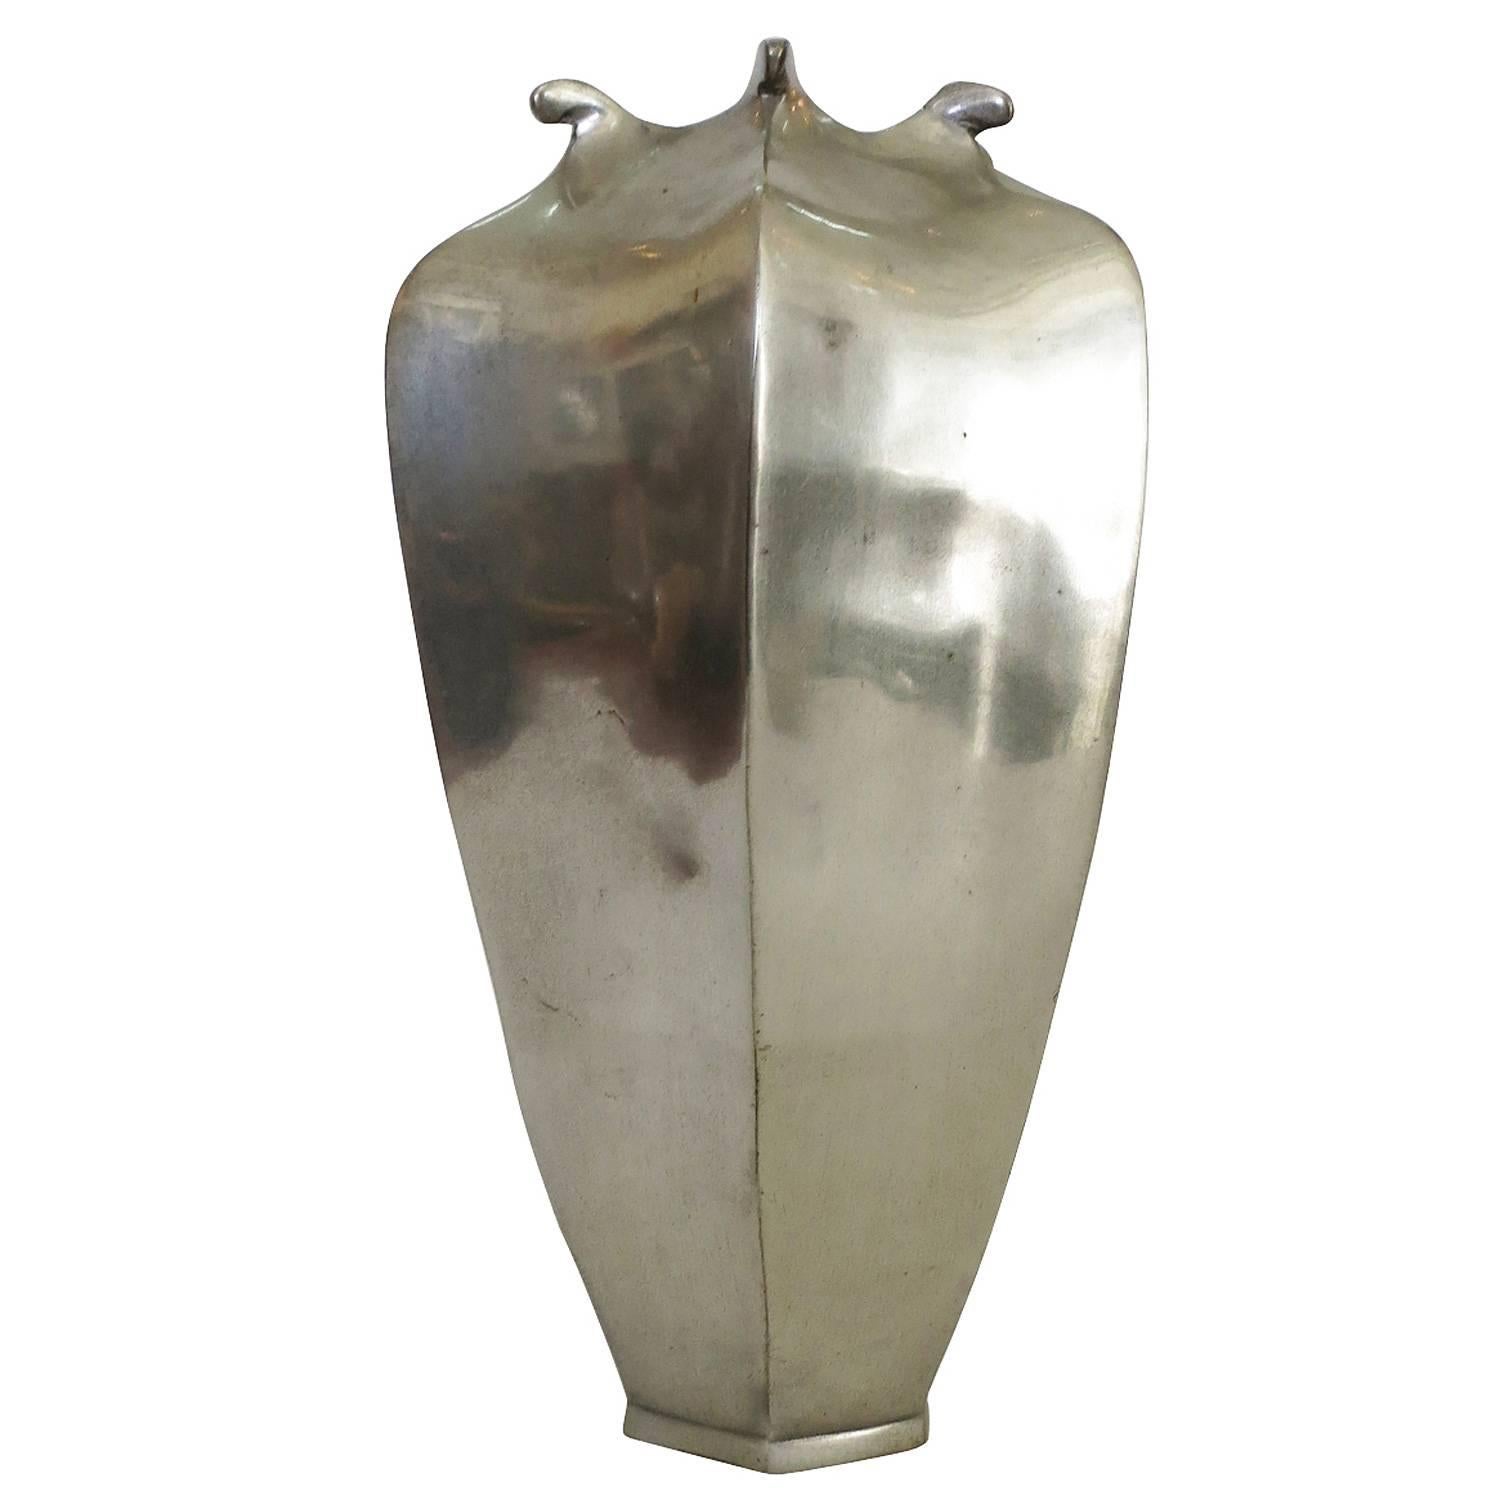 Art Nouveau 19th Century Japanese Style Bat Vase Cast in Bronze, Antique Silver Plated